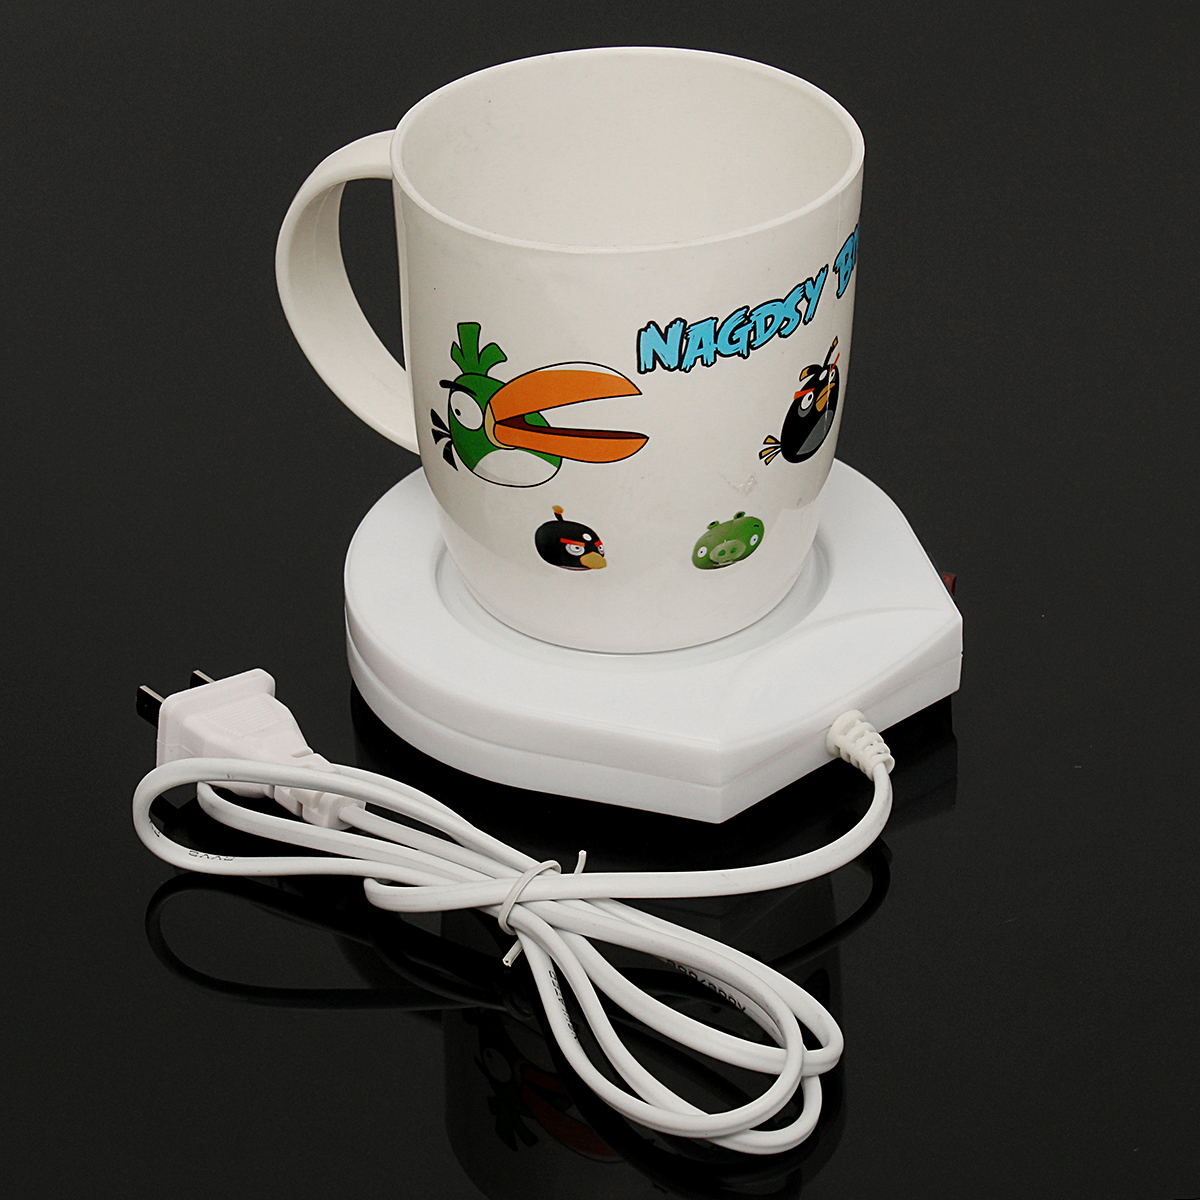 220v White Electric Powered Cup Warmer Heater Pad Coffee Tea Milk Mug US Plug 12